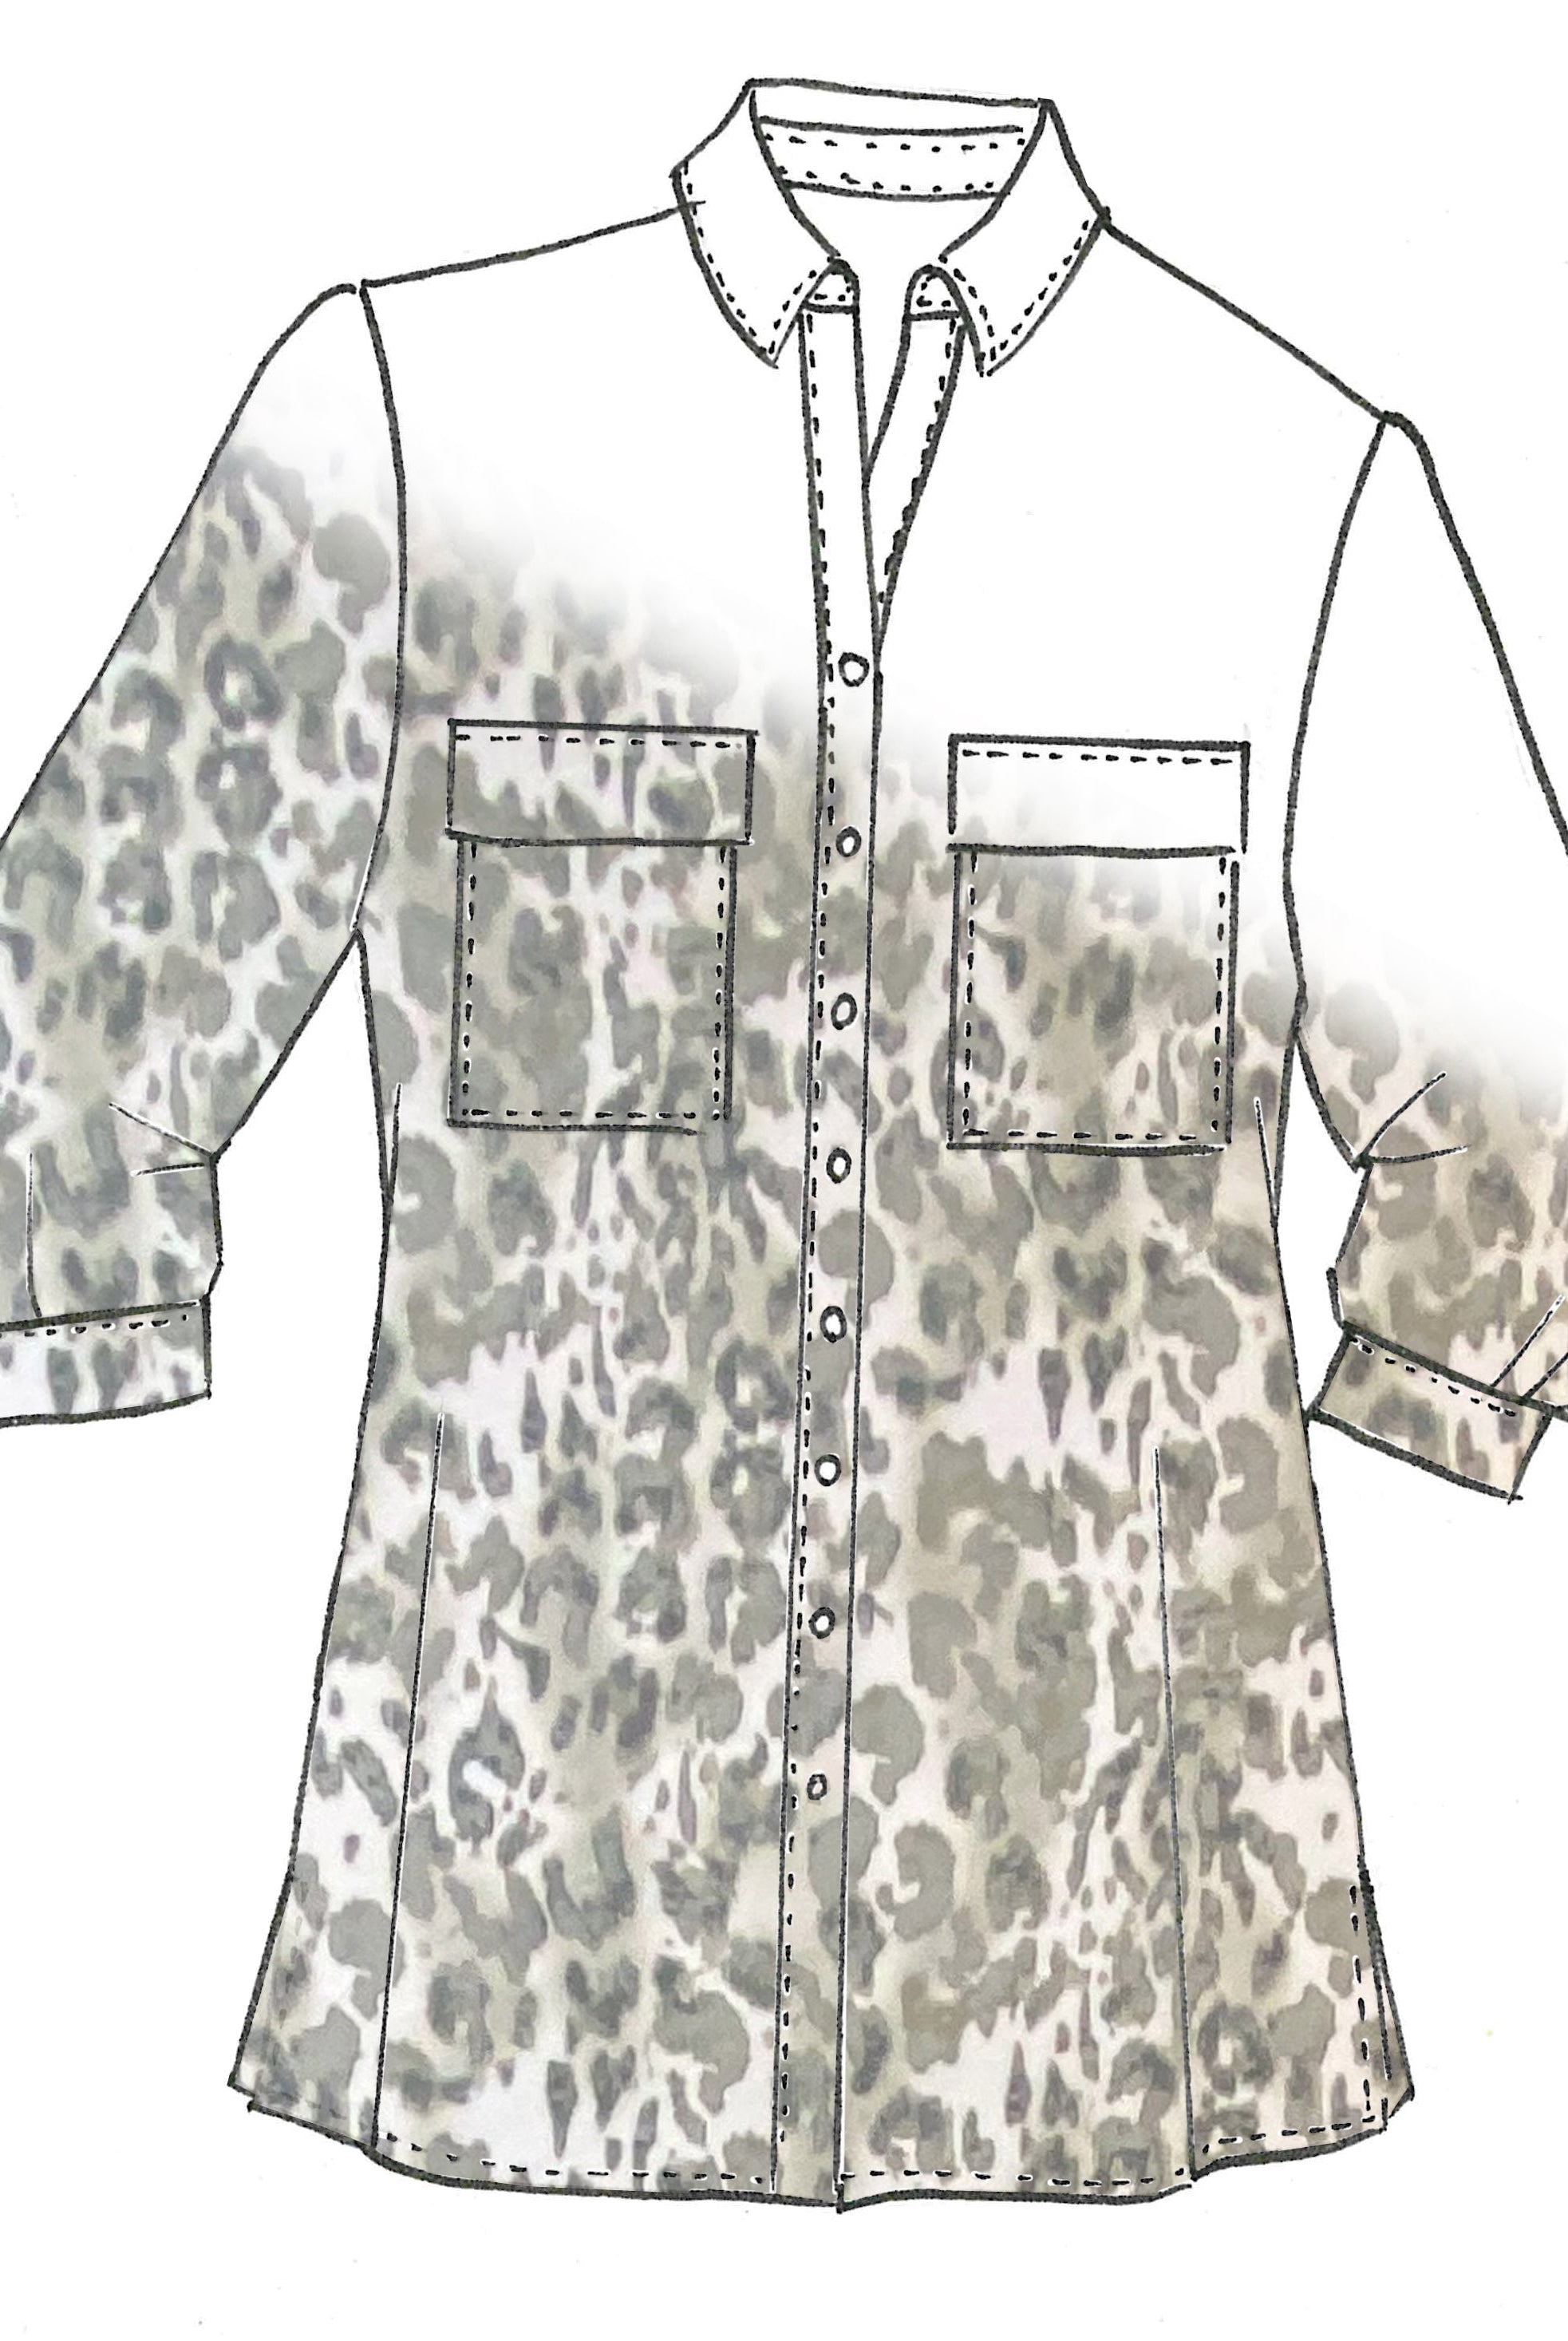 PAULA RYAN RELAXED Cheetah Silk Overshirt - Cheetah - Paula Ryan